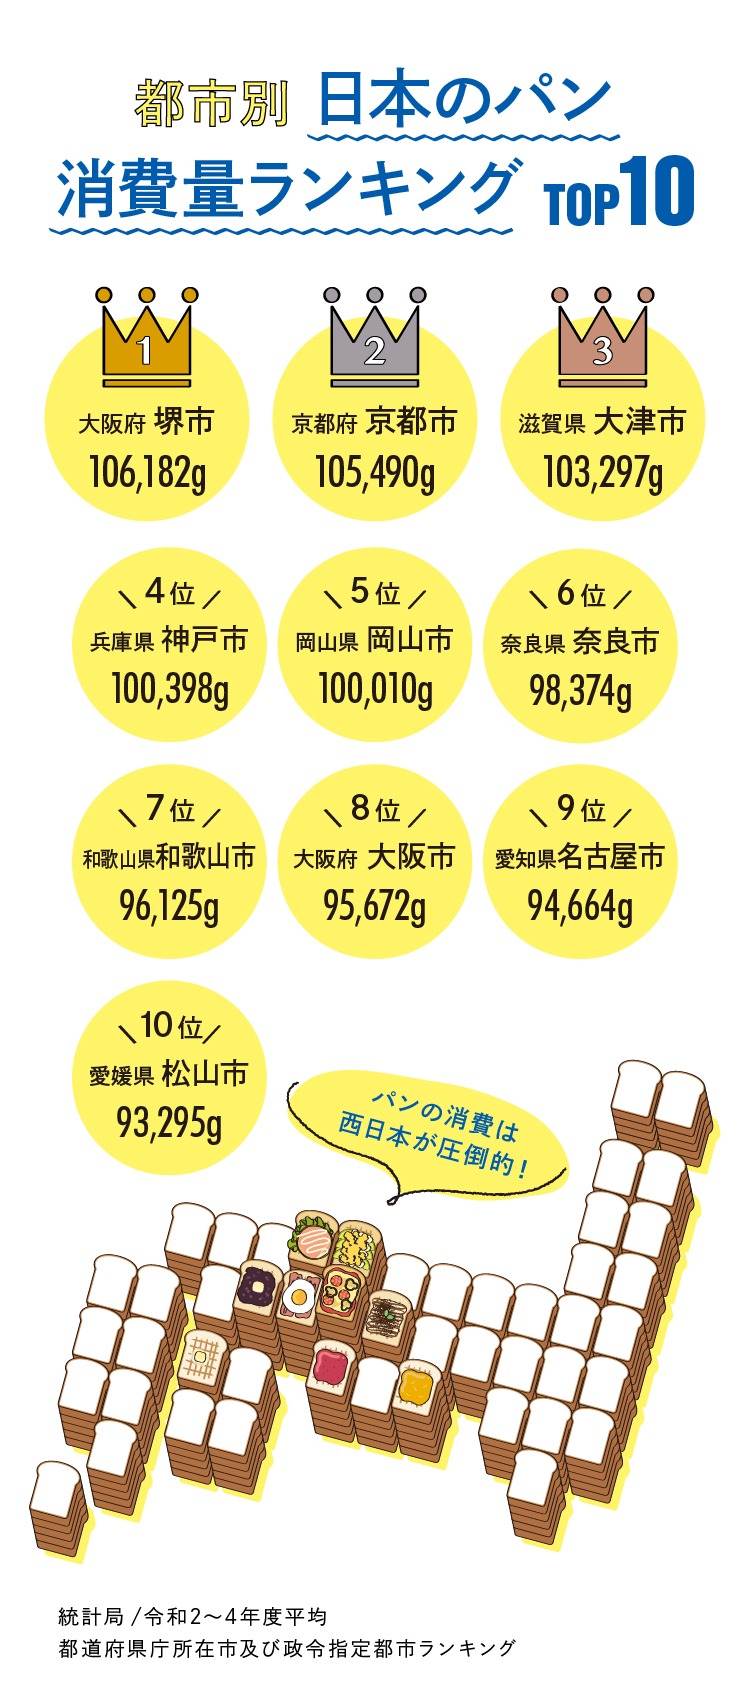 都市別で集計した日本のパン消費量ランキングTOP10。1位 堺市、2位京都市、3位大津市、4位神戸市、5位岡山市、6位奈良市、7位和歌山市、8位大阪市、9位名古屋市、10位松山市。